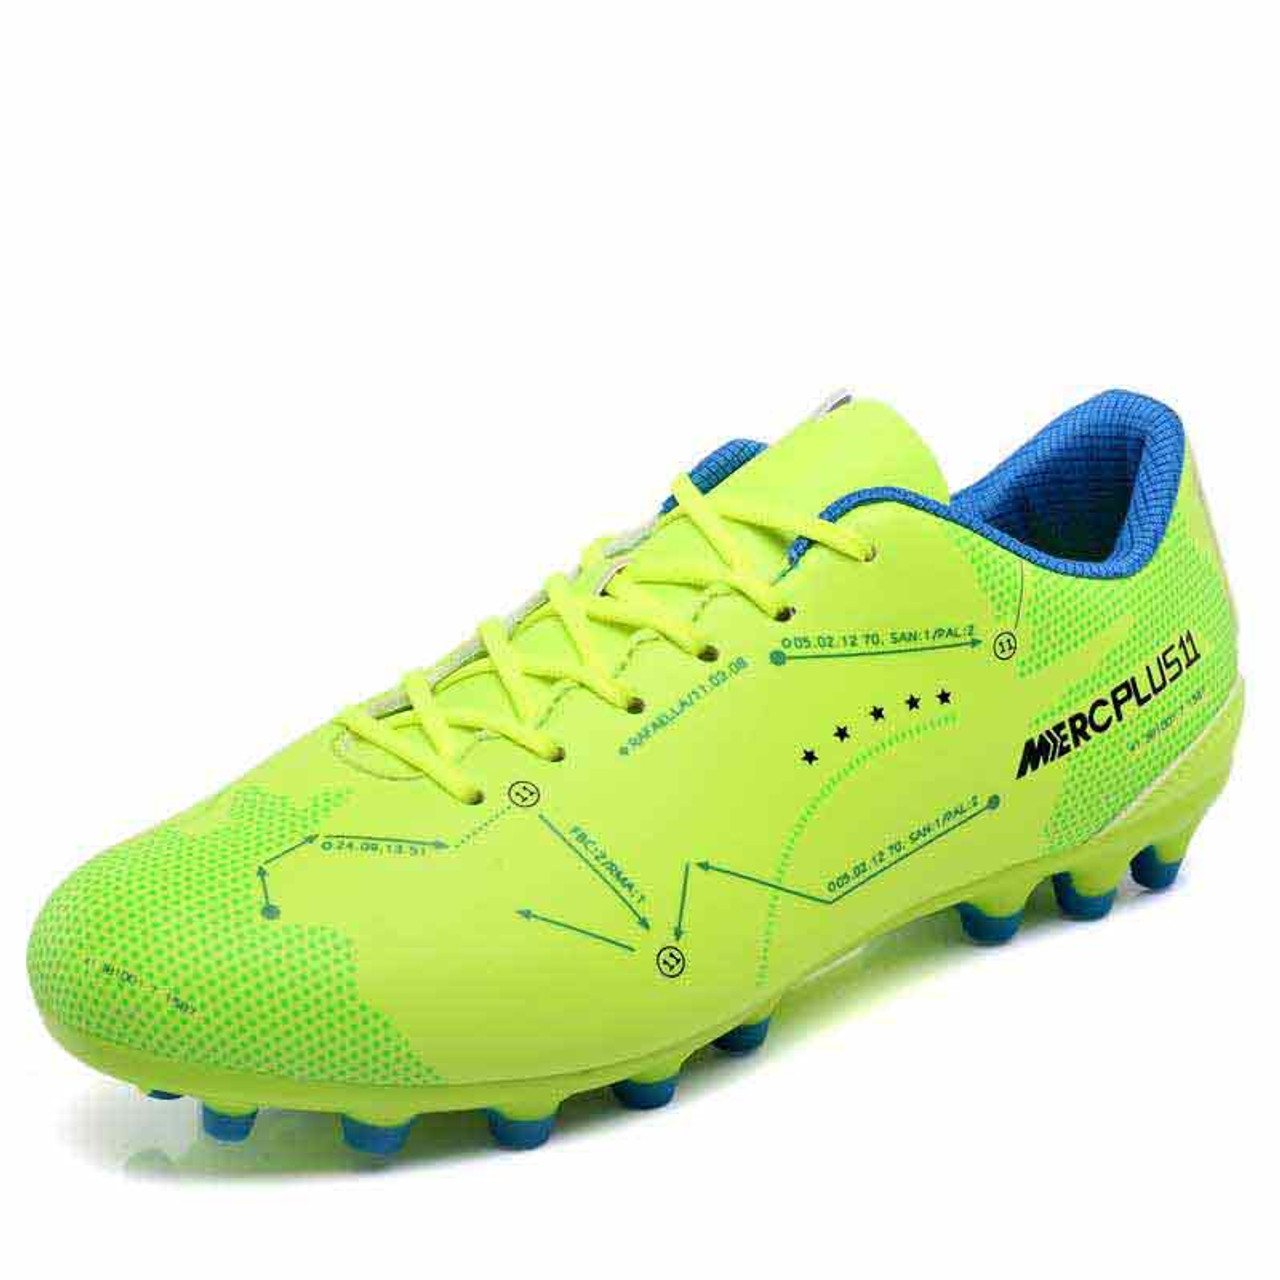 soccer boots online